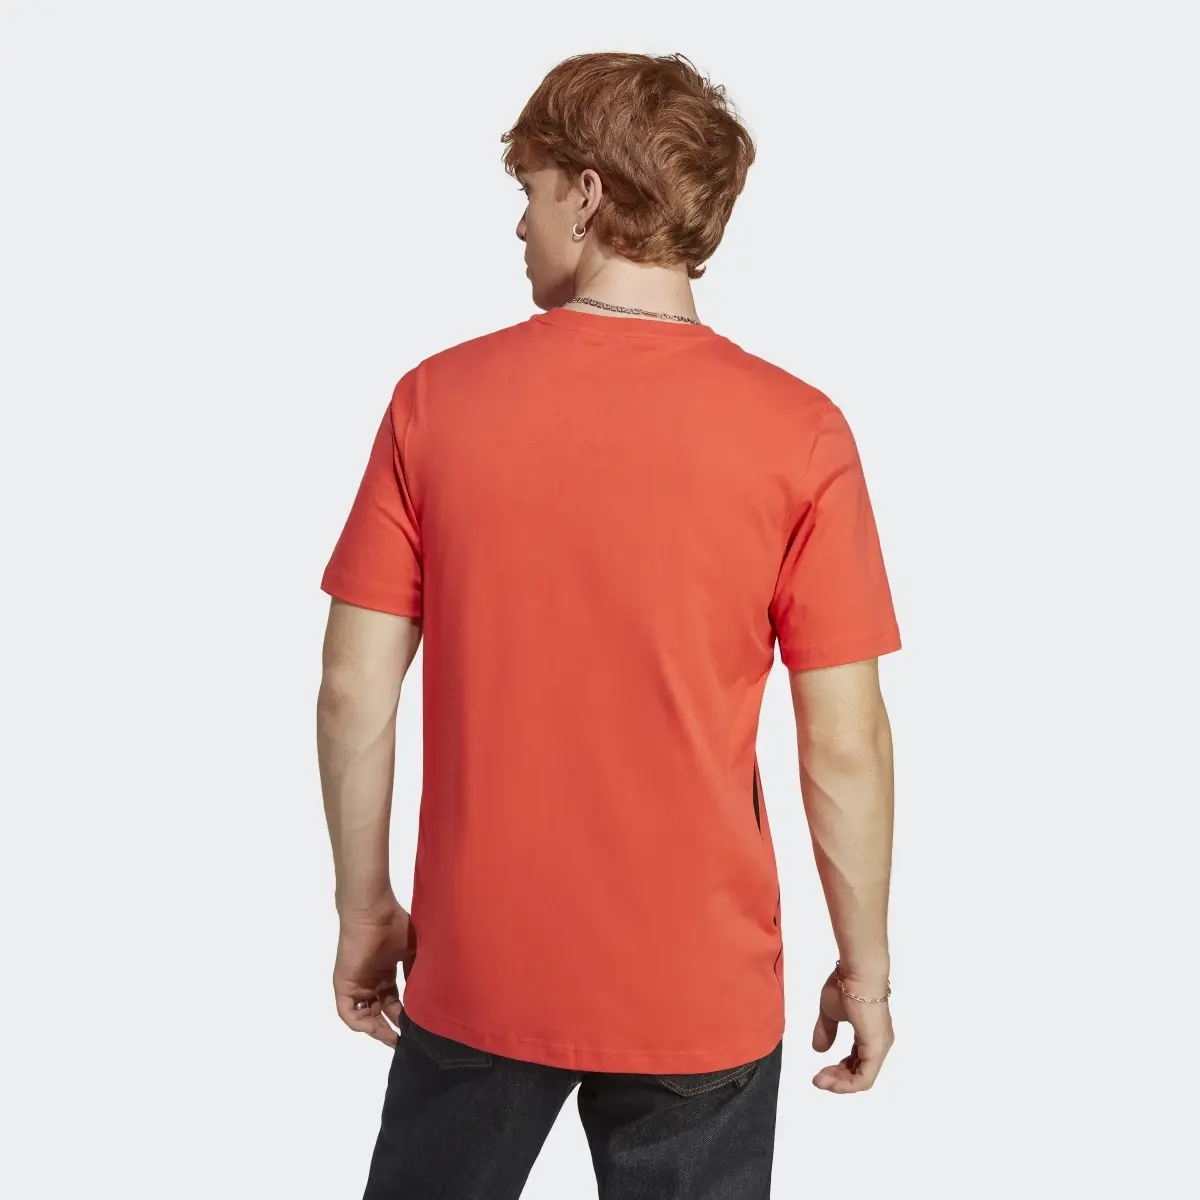 Adidas Colourblock Tişört. 3